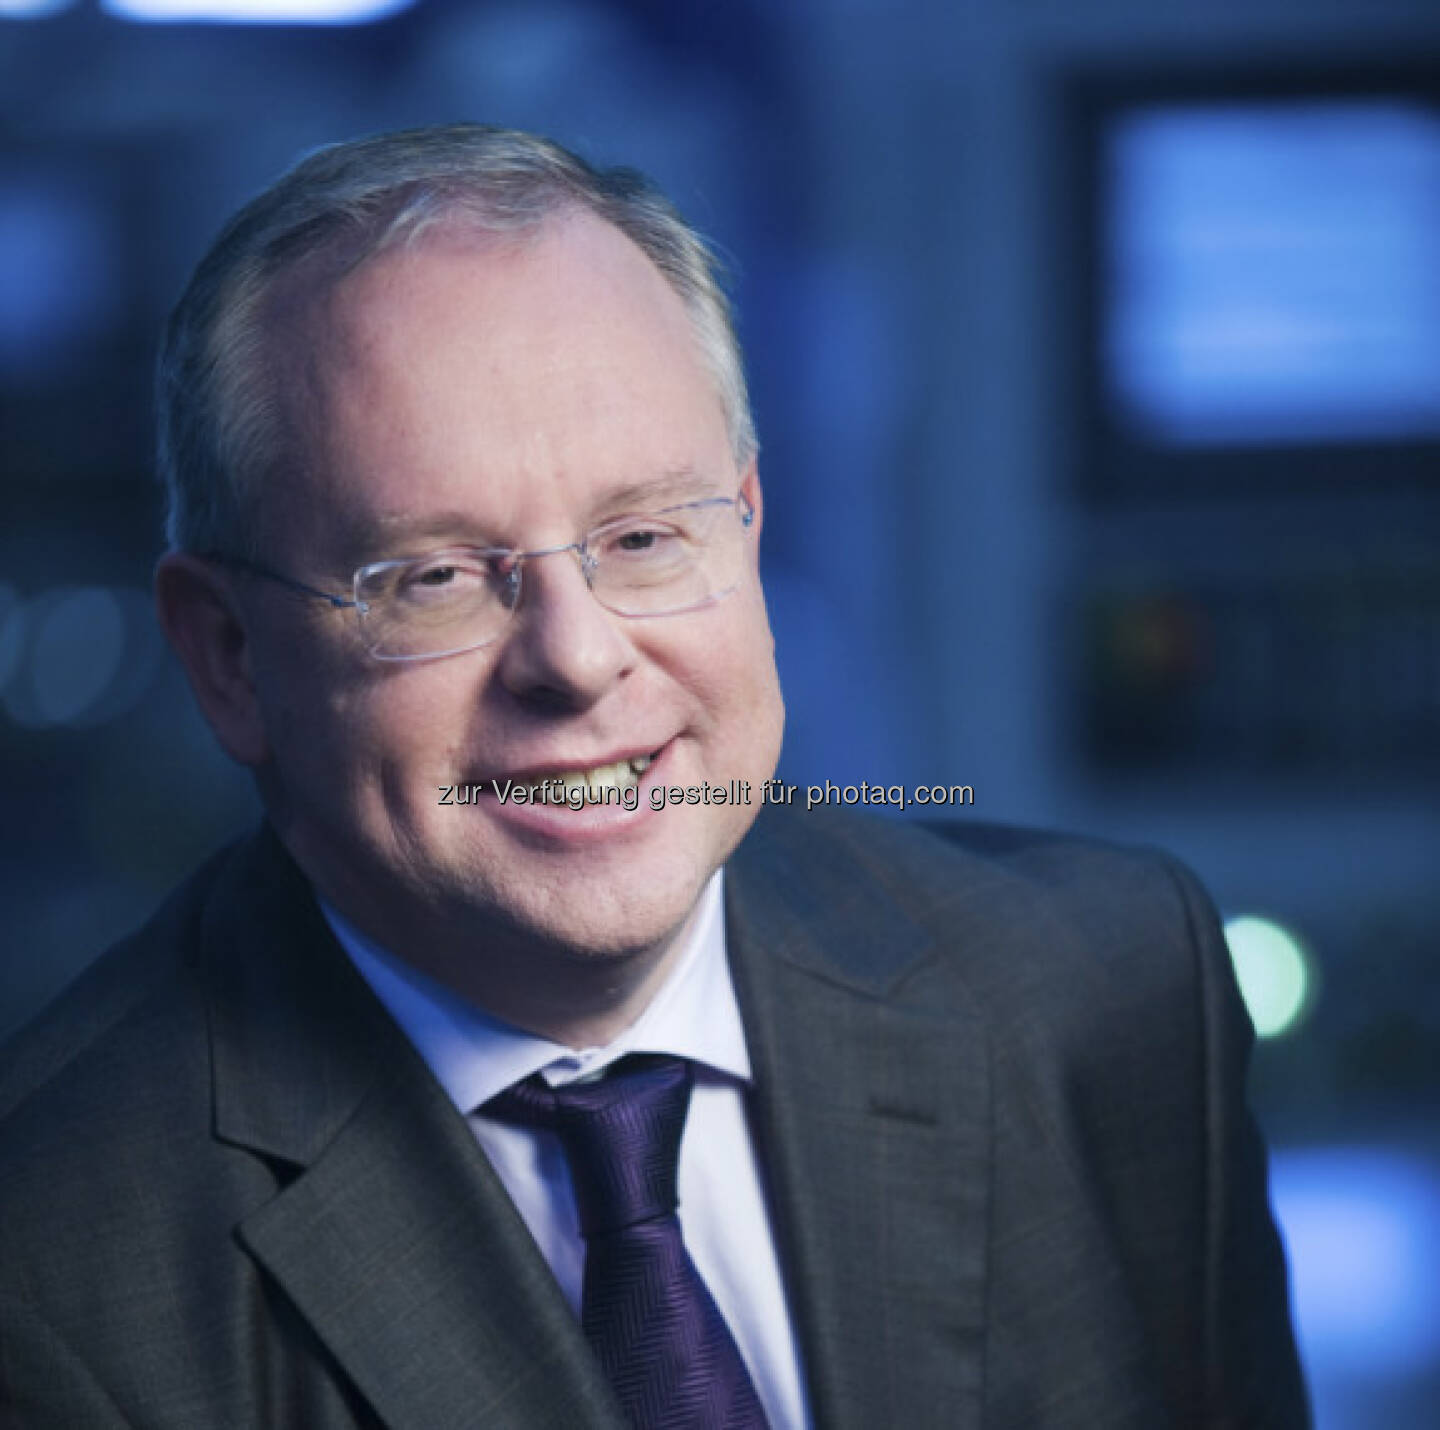 Franz Gritsch, Vorstand SBO (26. Februar) - finanzmarktfoto.at wünscht alles Gute!